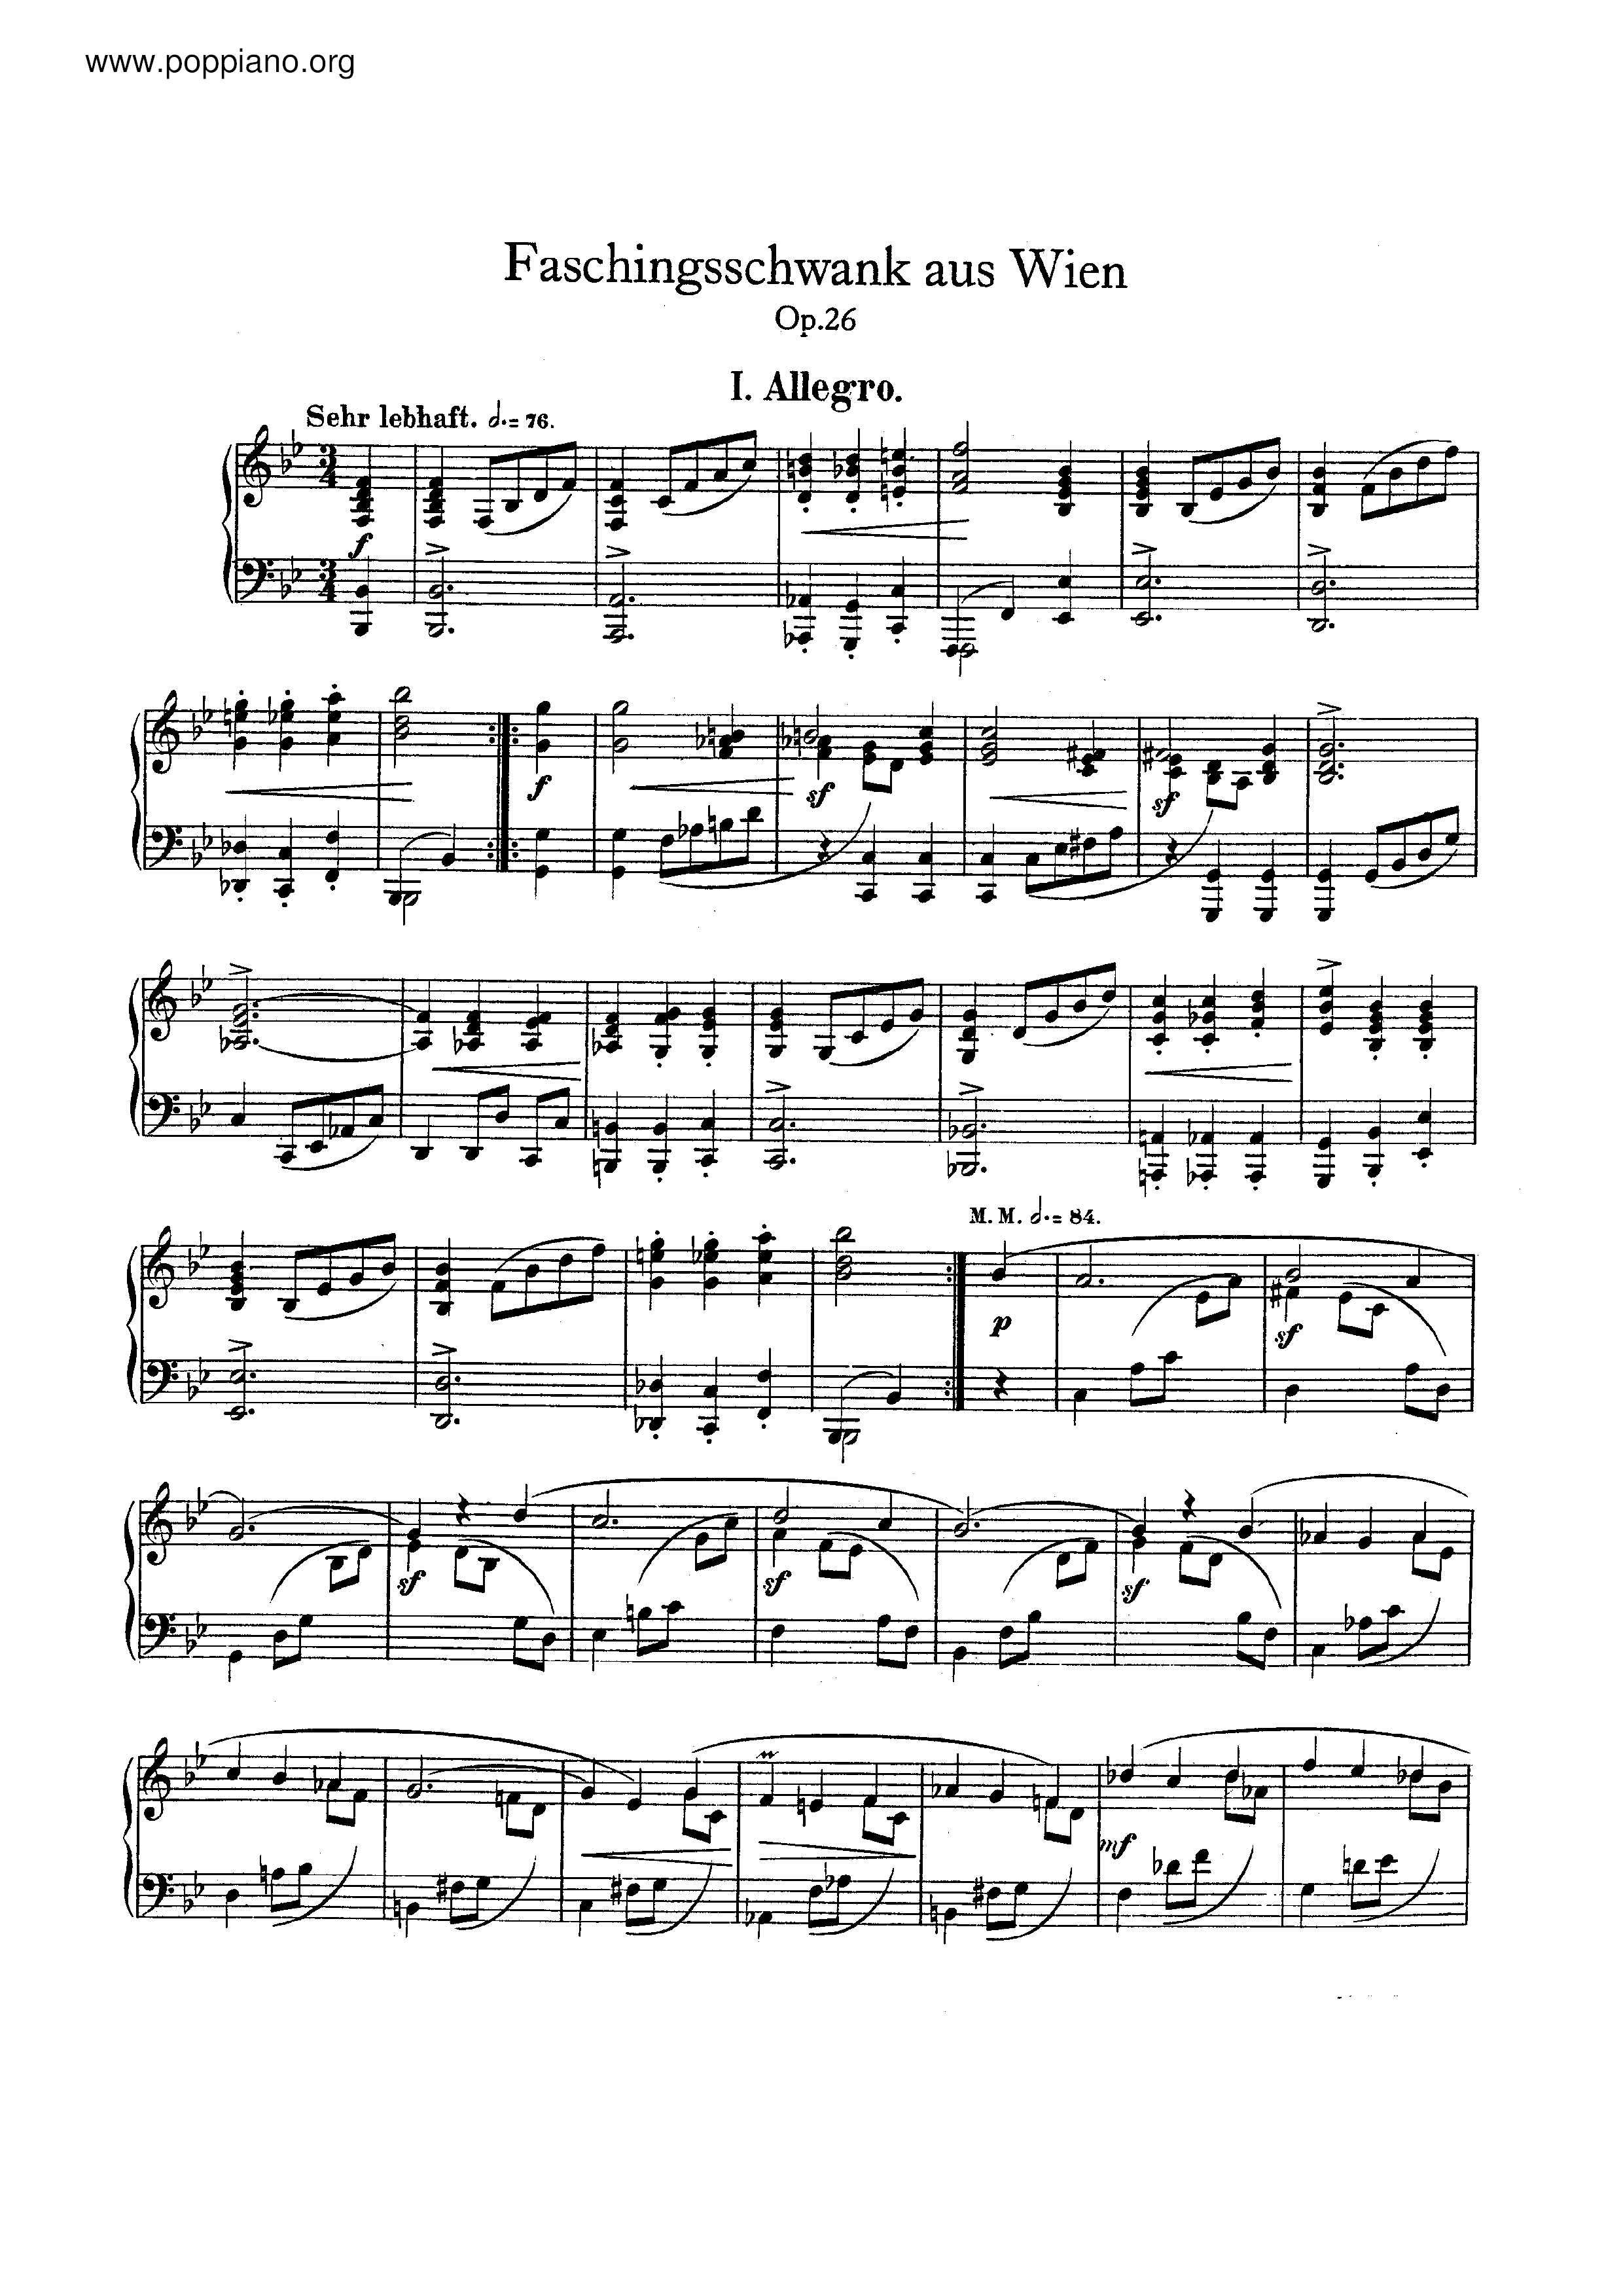 Faschingsschwank aus Wien, Op.26ピアノ譜